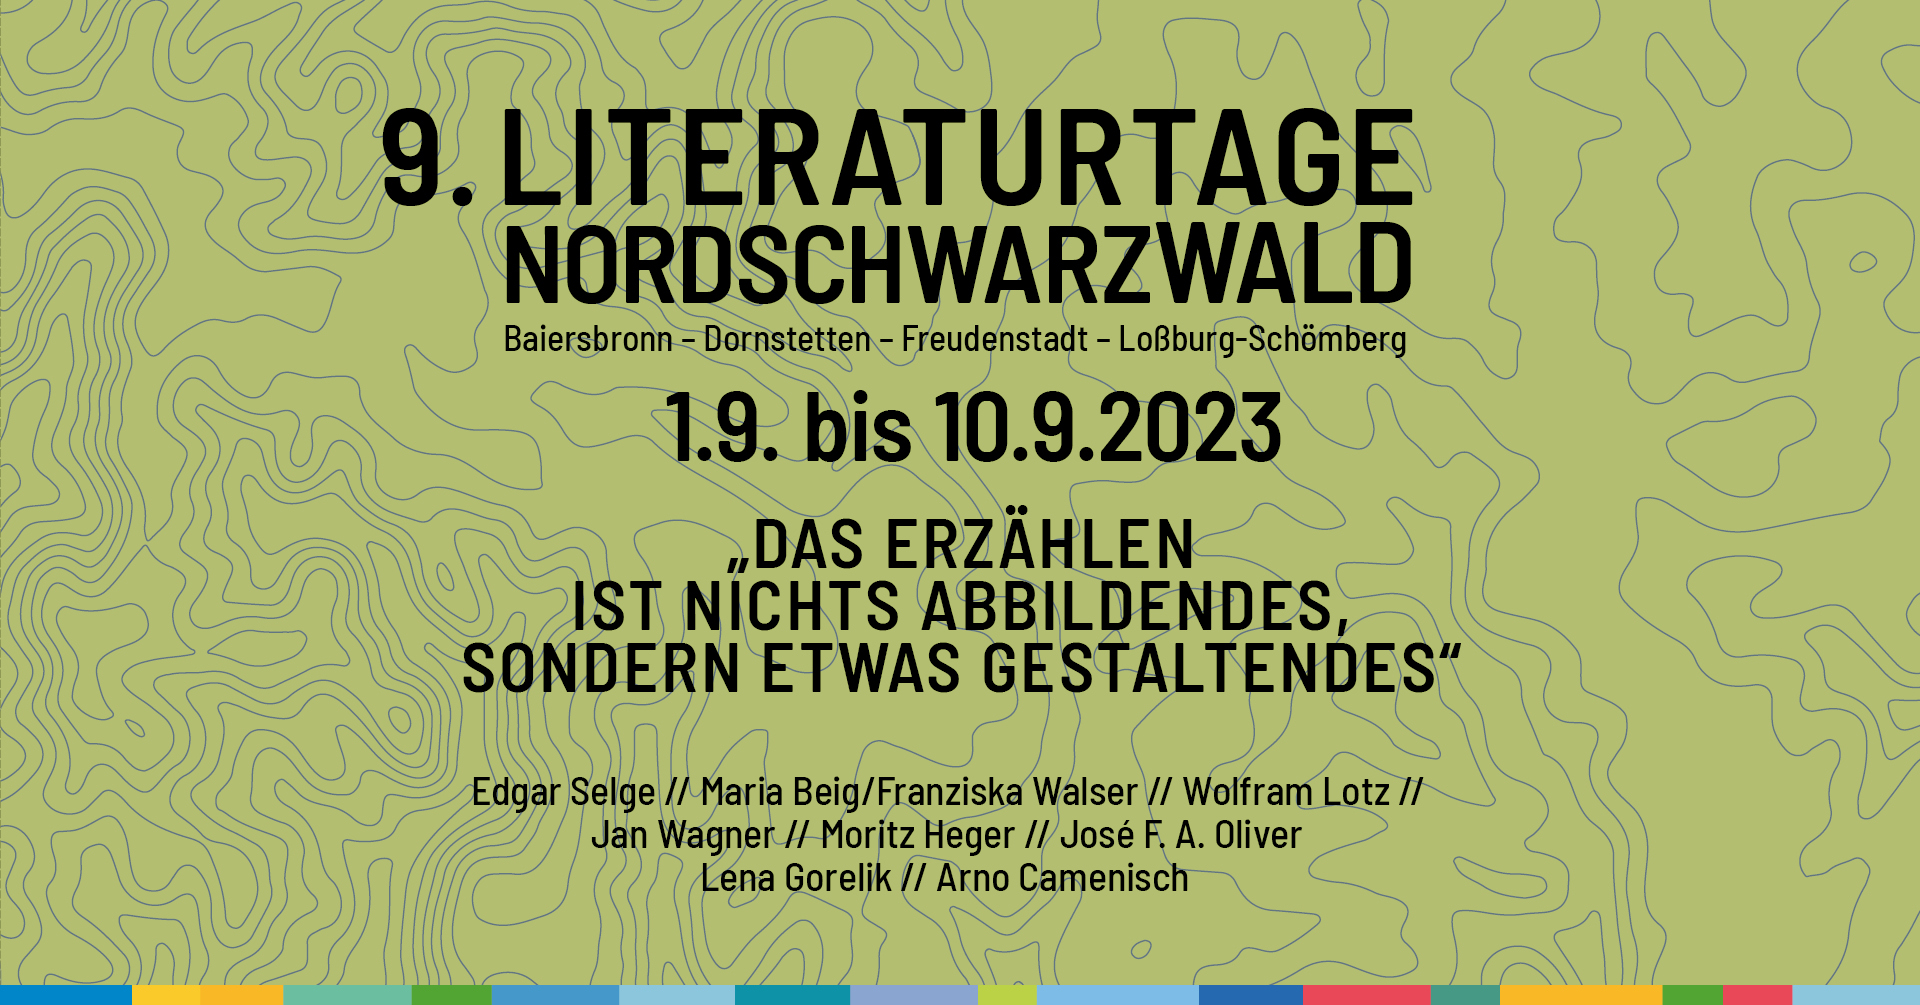 (c) Literaturtage.info